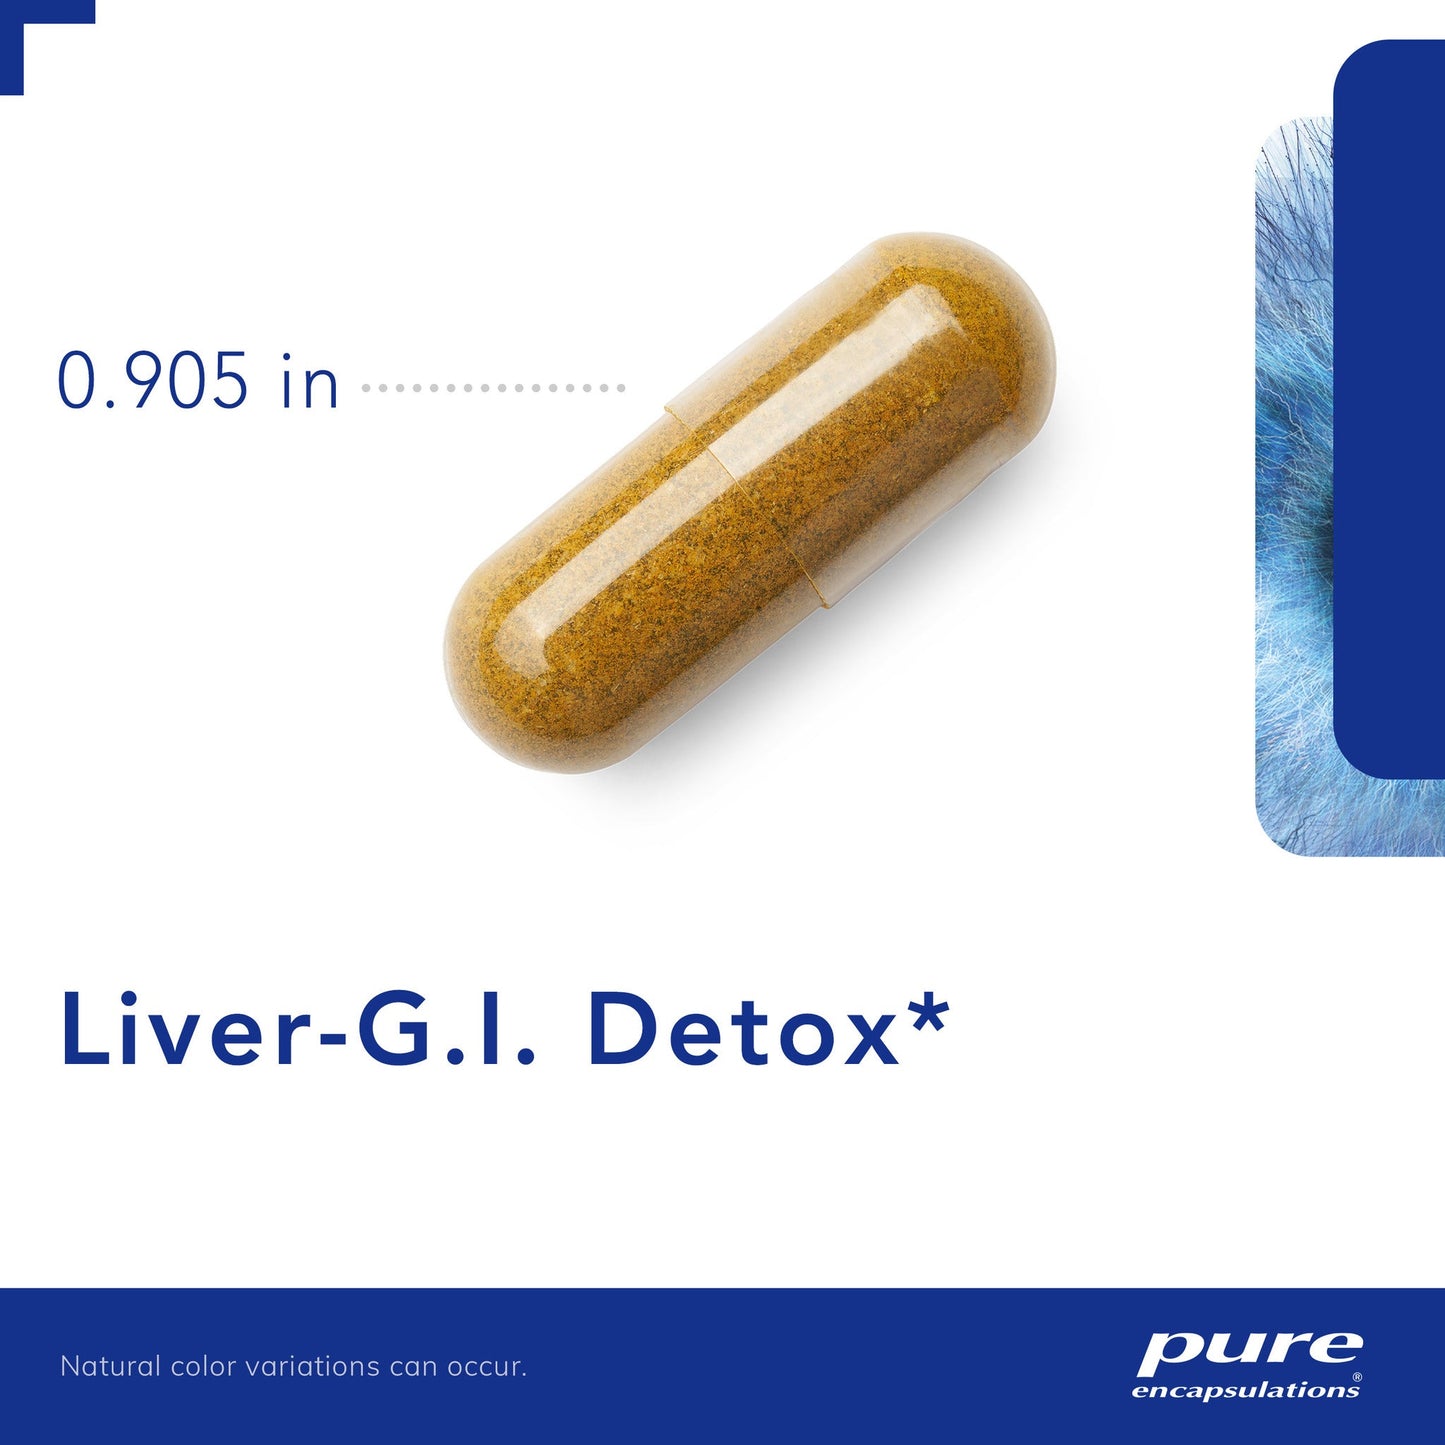 Liver G.I. Detox